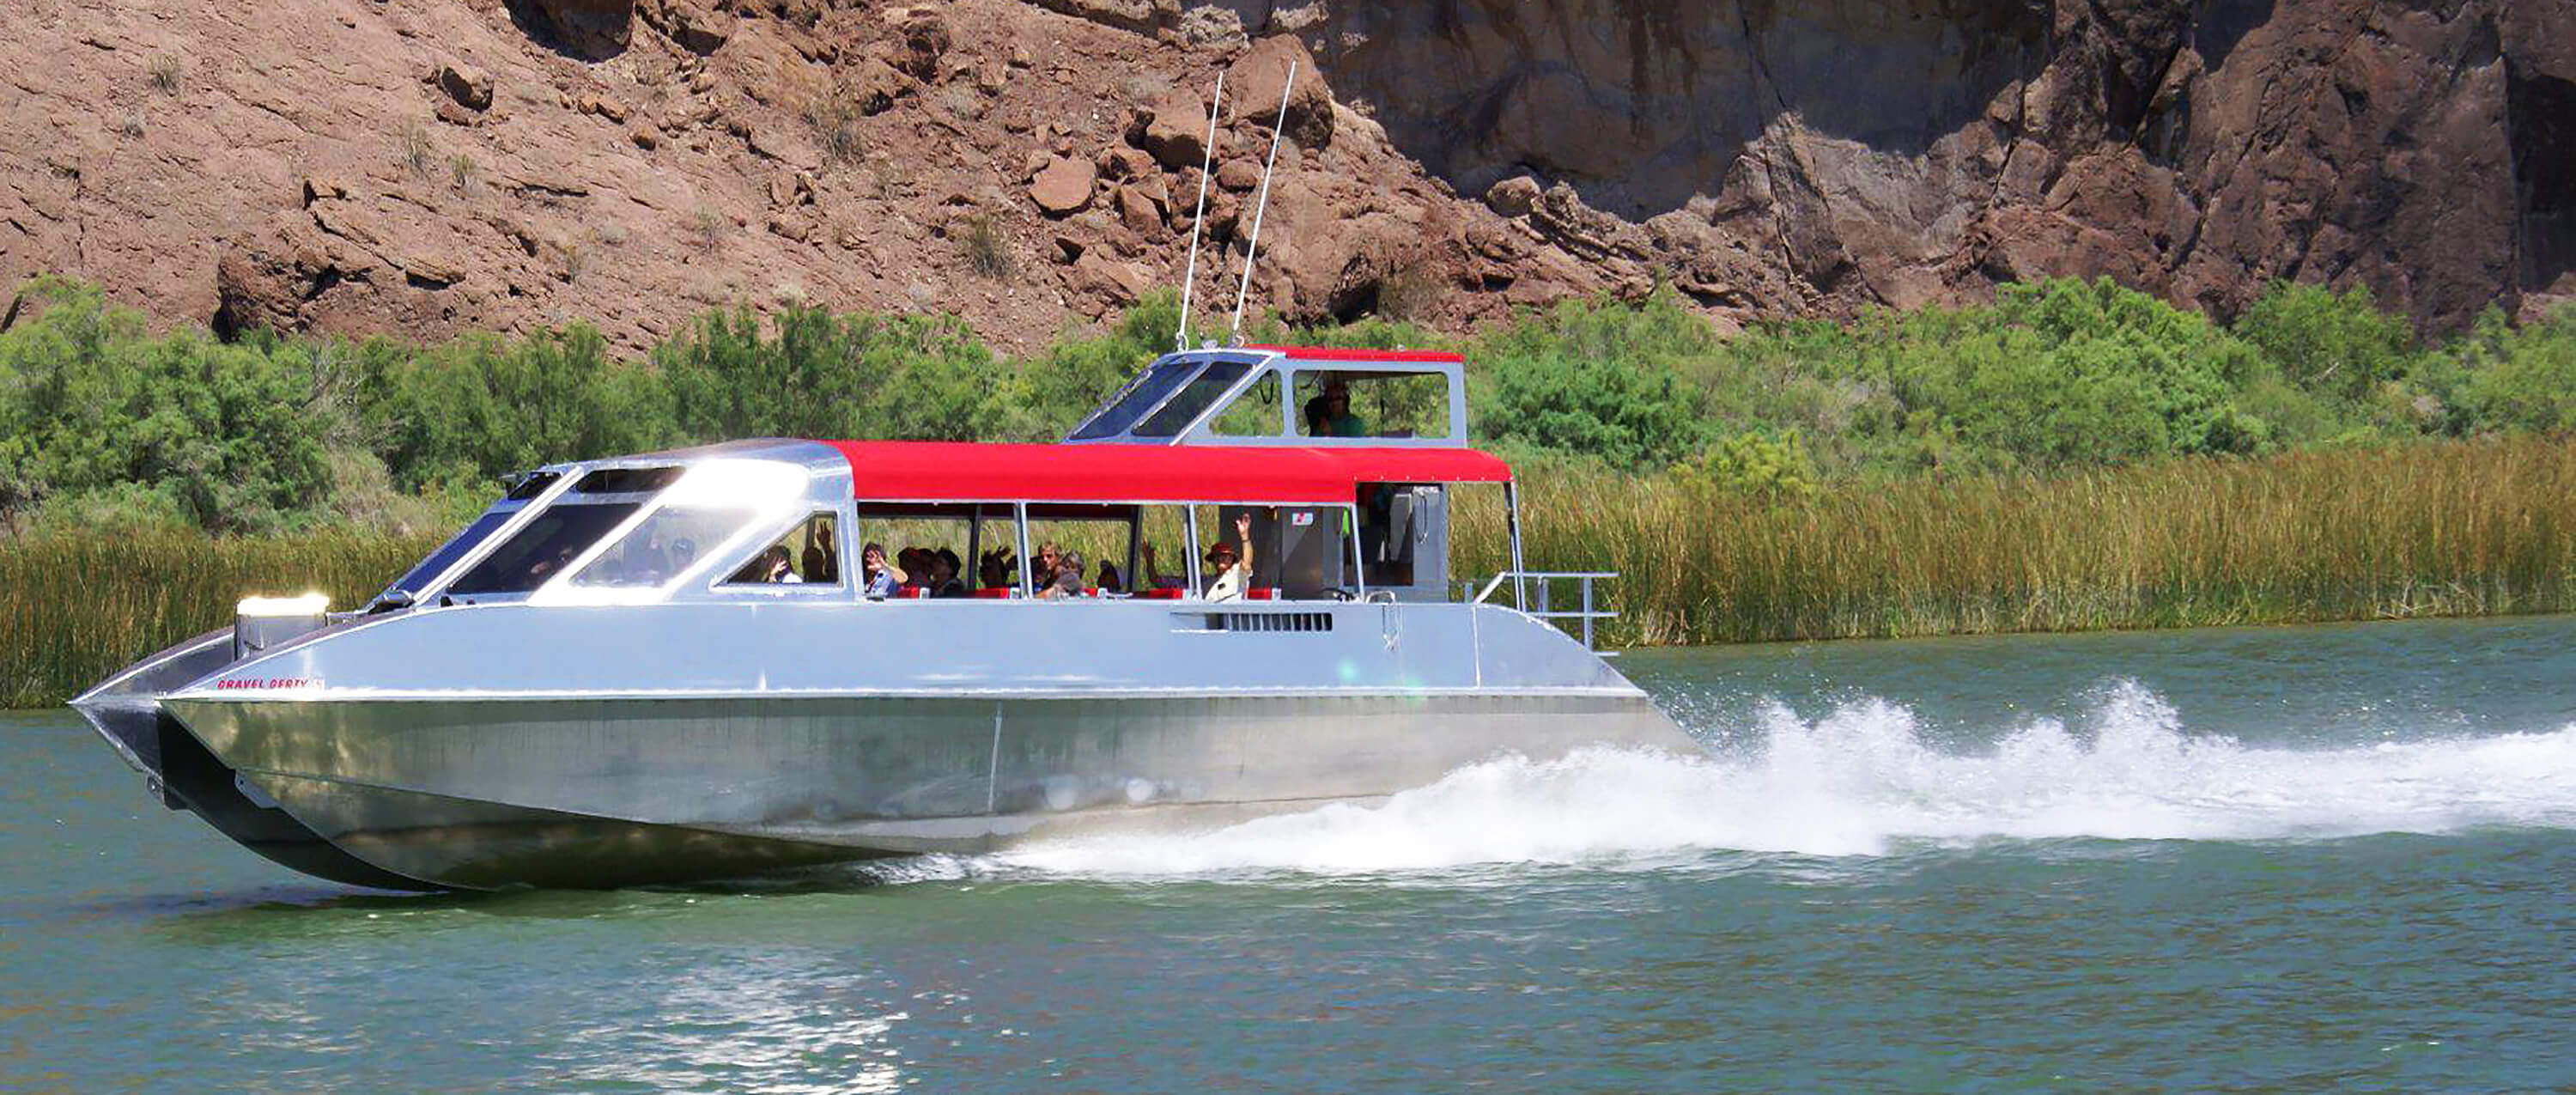 colorado river boat tour austin